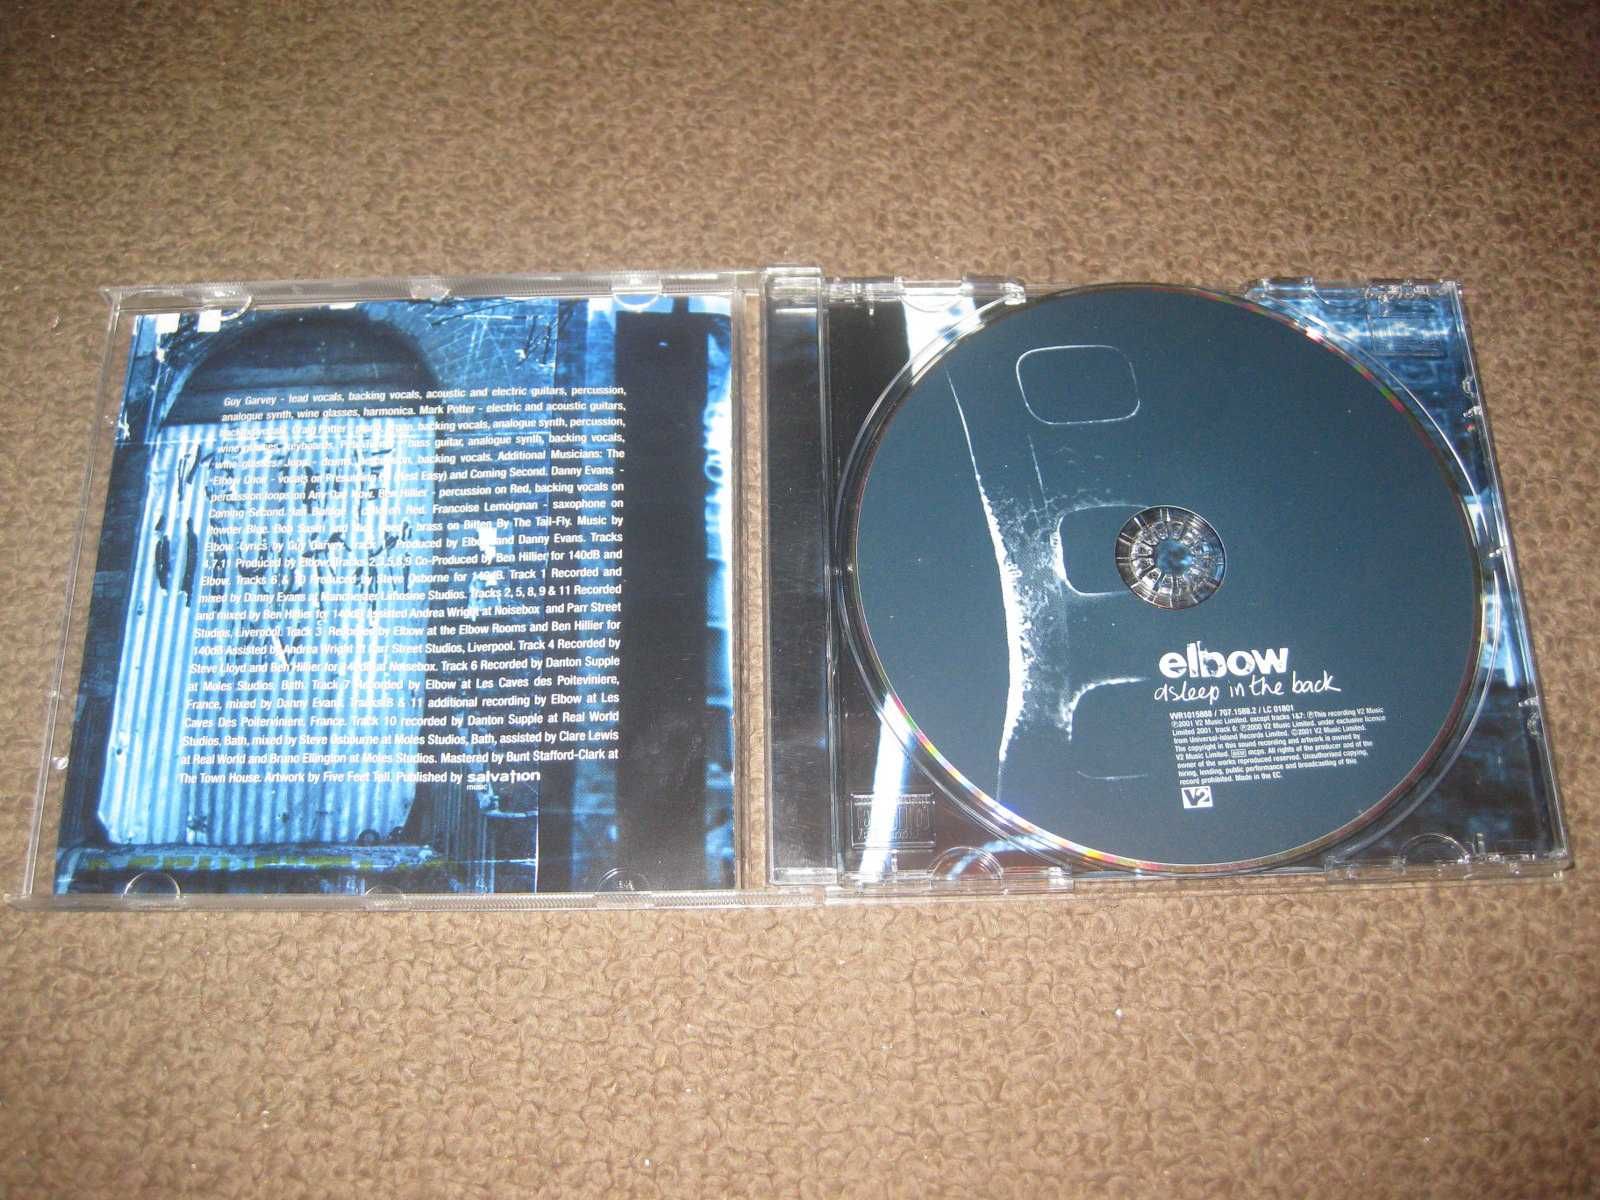 CD dos Elbow "Asleep in the Back" Portes Grátis!